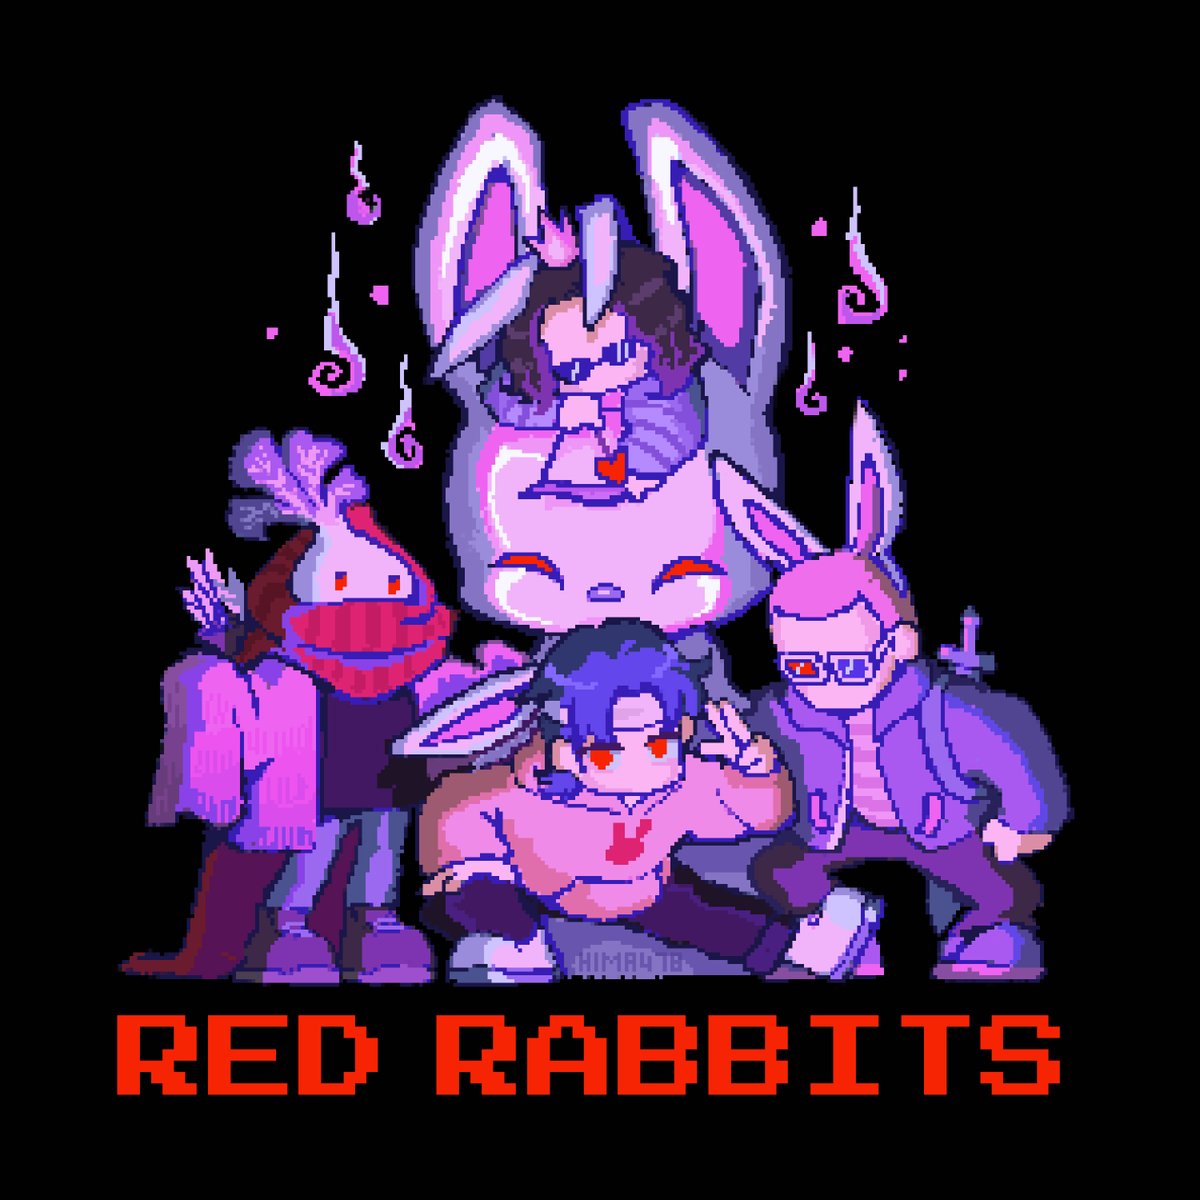 MCC29 Red rabbits :3
#5upfanart #eretfanart #sapnapfanart #jackmanifoldfanart #pixelart